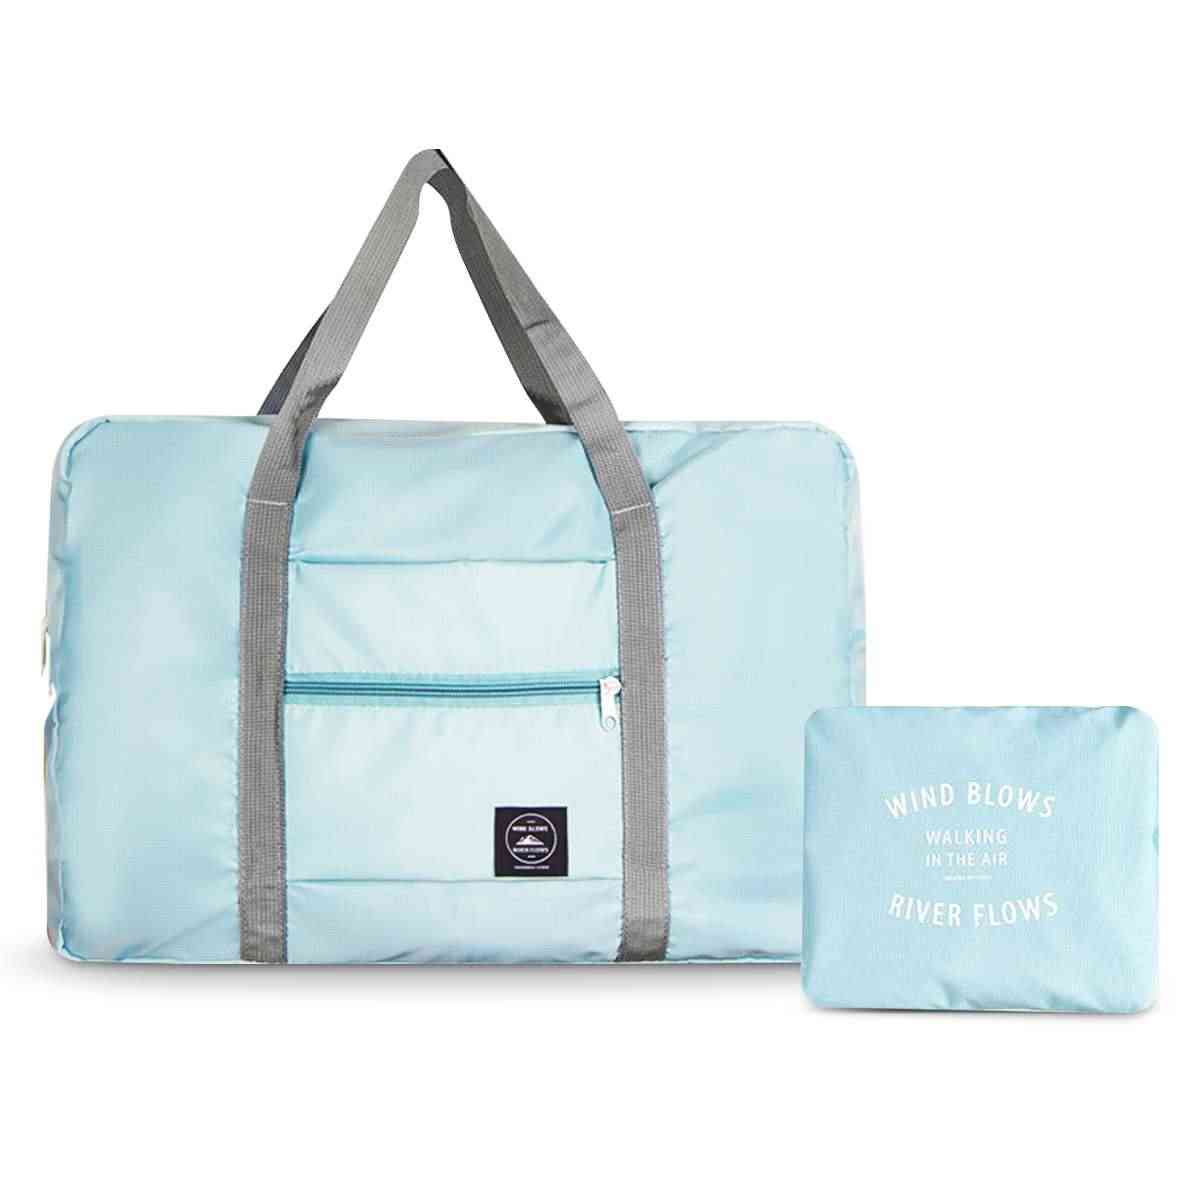 Waterproof Oxford Cloth Luggage Travel Bag